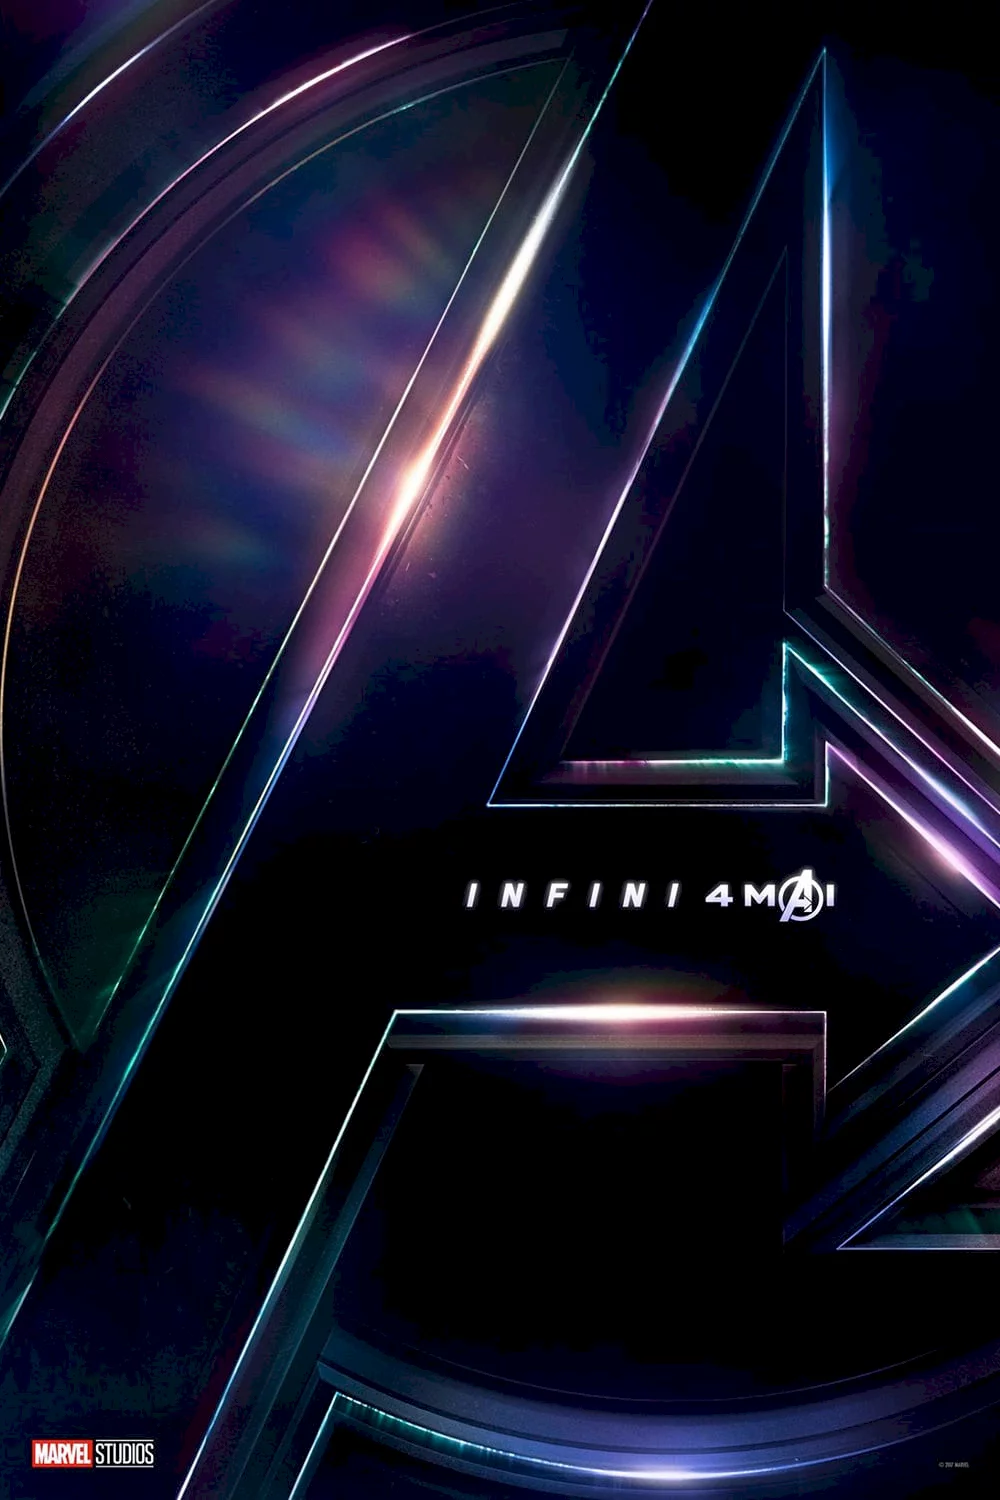 Photo du film : Avengers : Infinity War